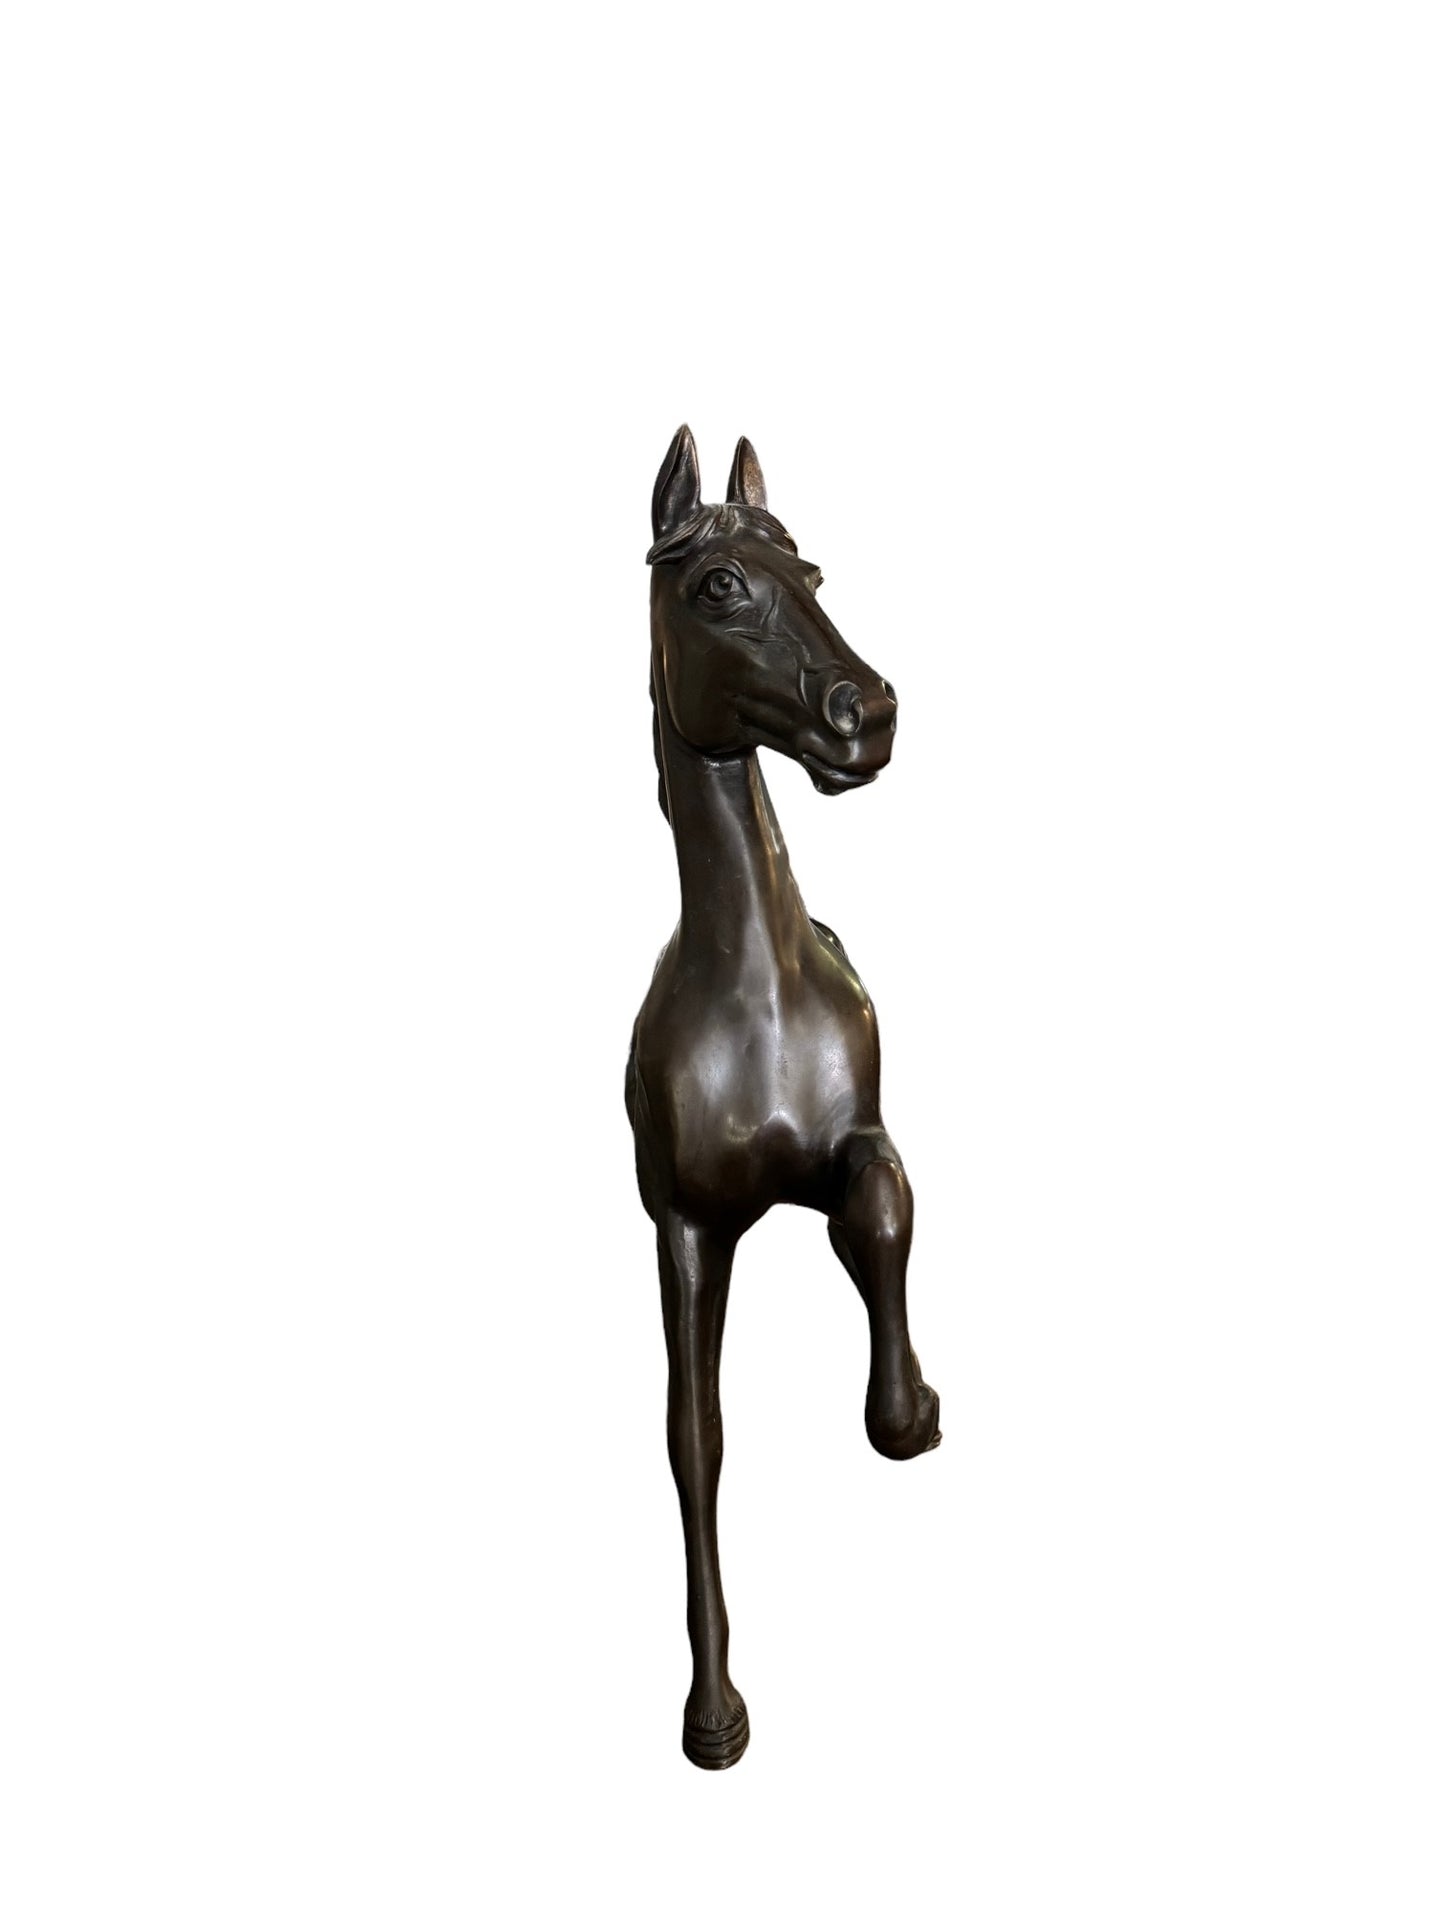 Vintage Japanese Bronze Running Horse Statue Art Sculpture~Signed EK221-237